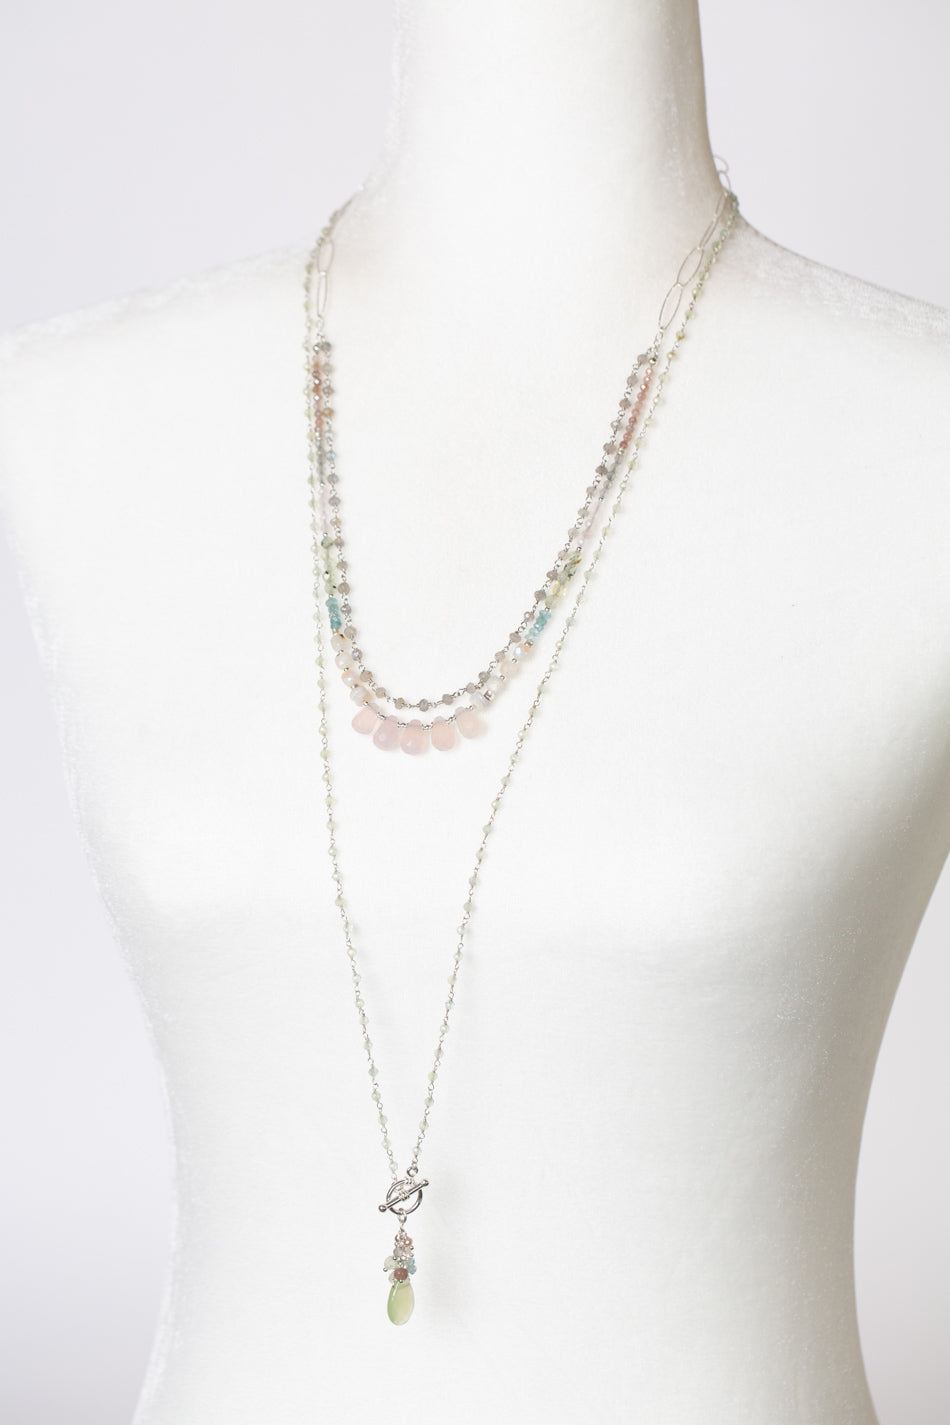 Fae Opal, Zircon, Rose Quartz Necklaces And Earrings Set